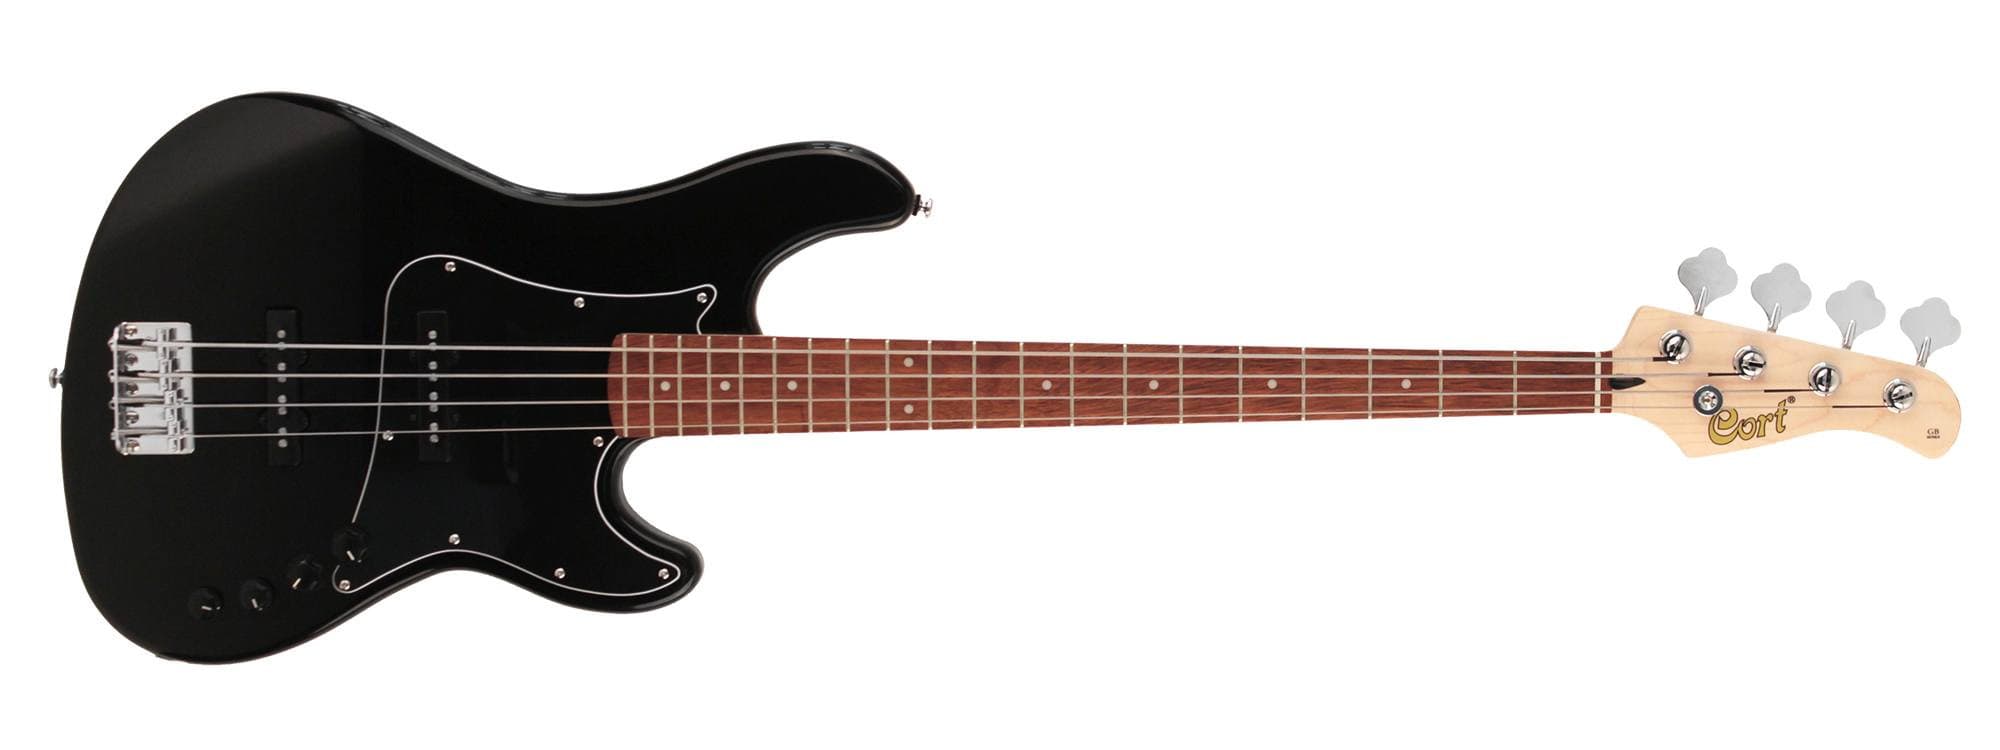 Cort Bass GB34 JJ Black, Bass Guitar for sale at Richards Guitars.